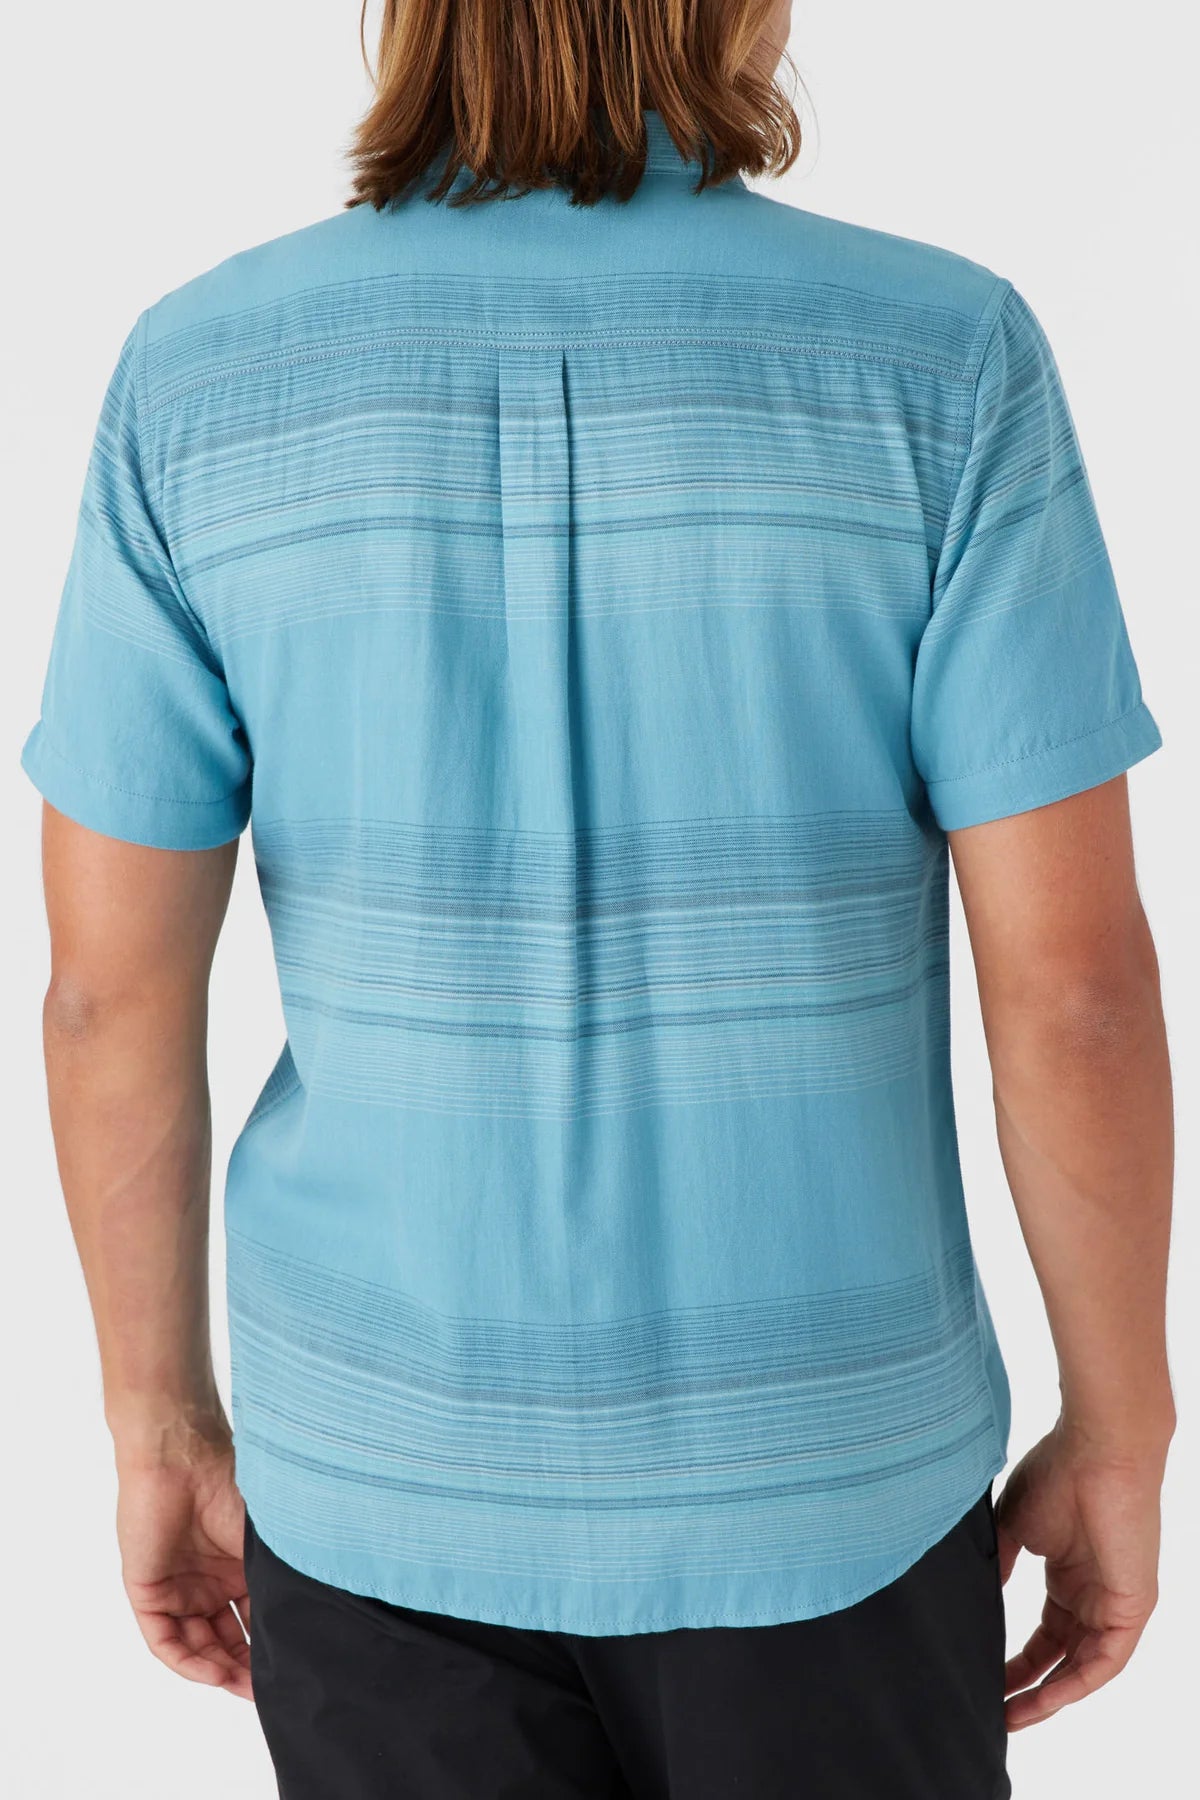 O'Neill Seafaring Stripe Woven Shirt